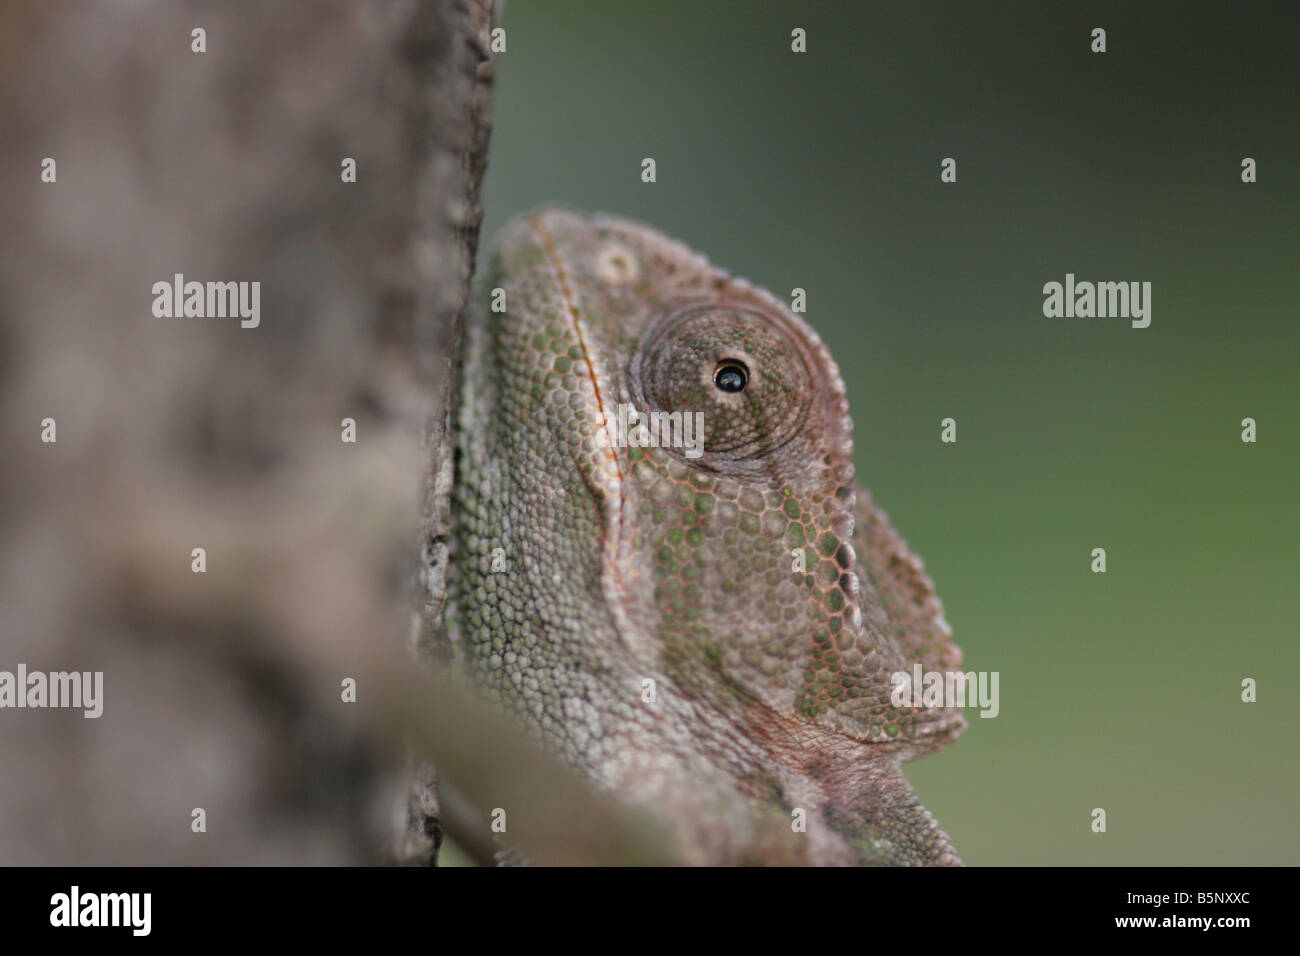 Close up of the head and eye of a Common Chameleon Chamaeleo chamaeleon Stock Photo